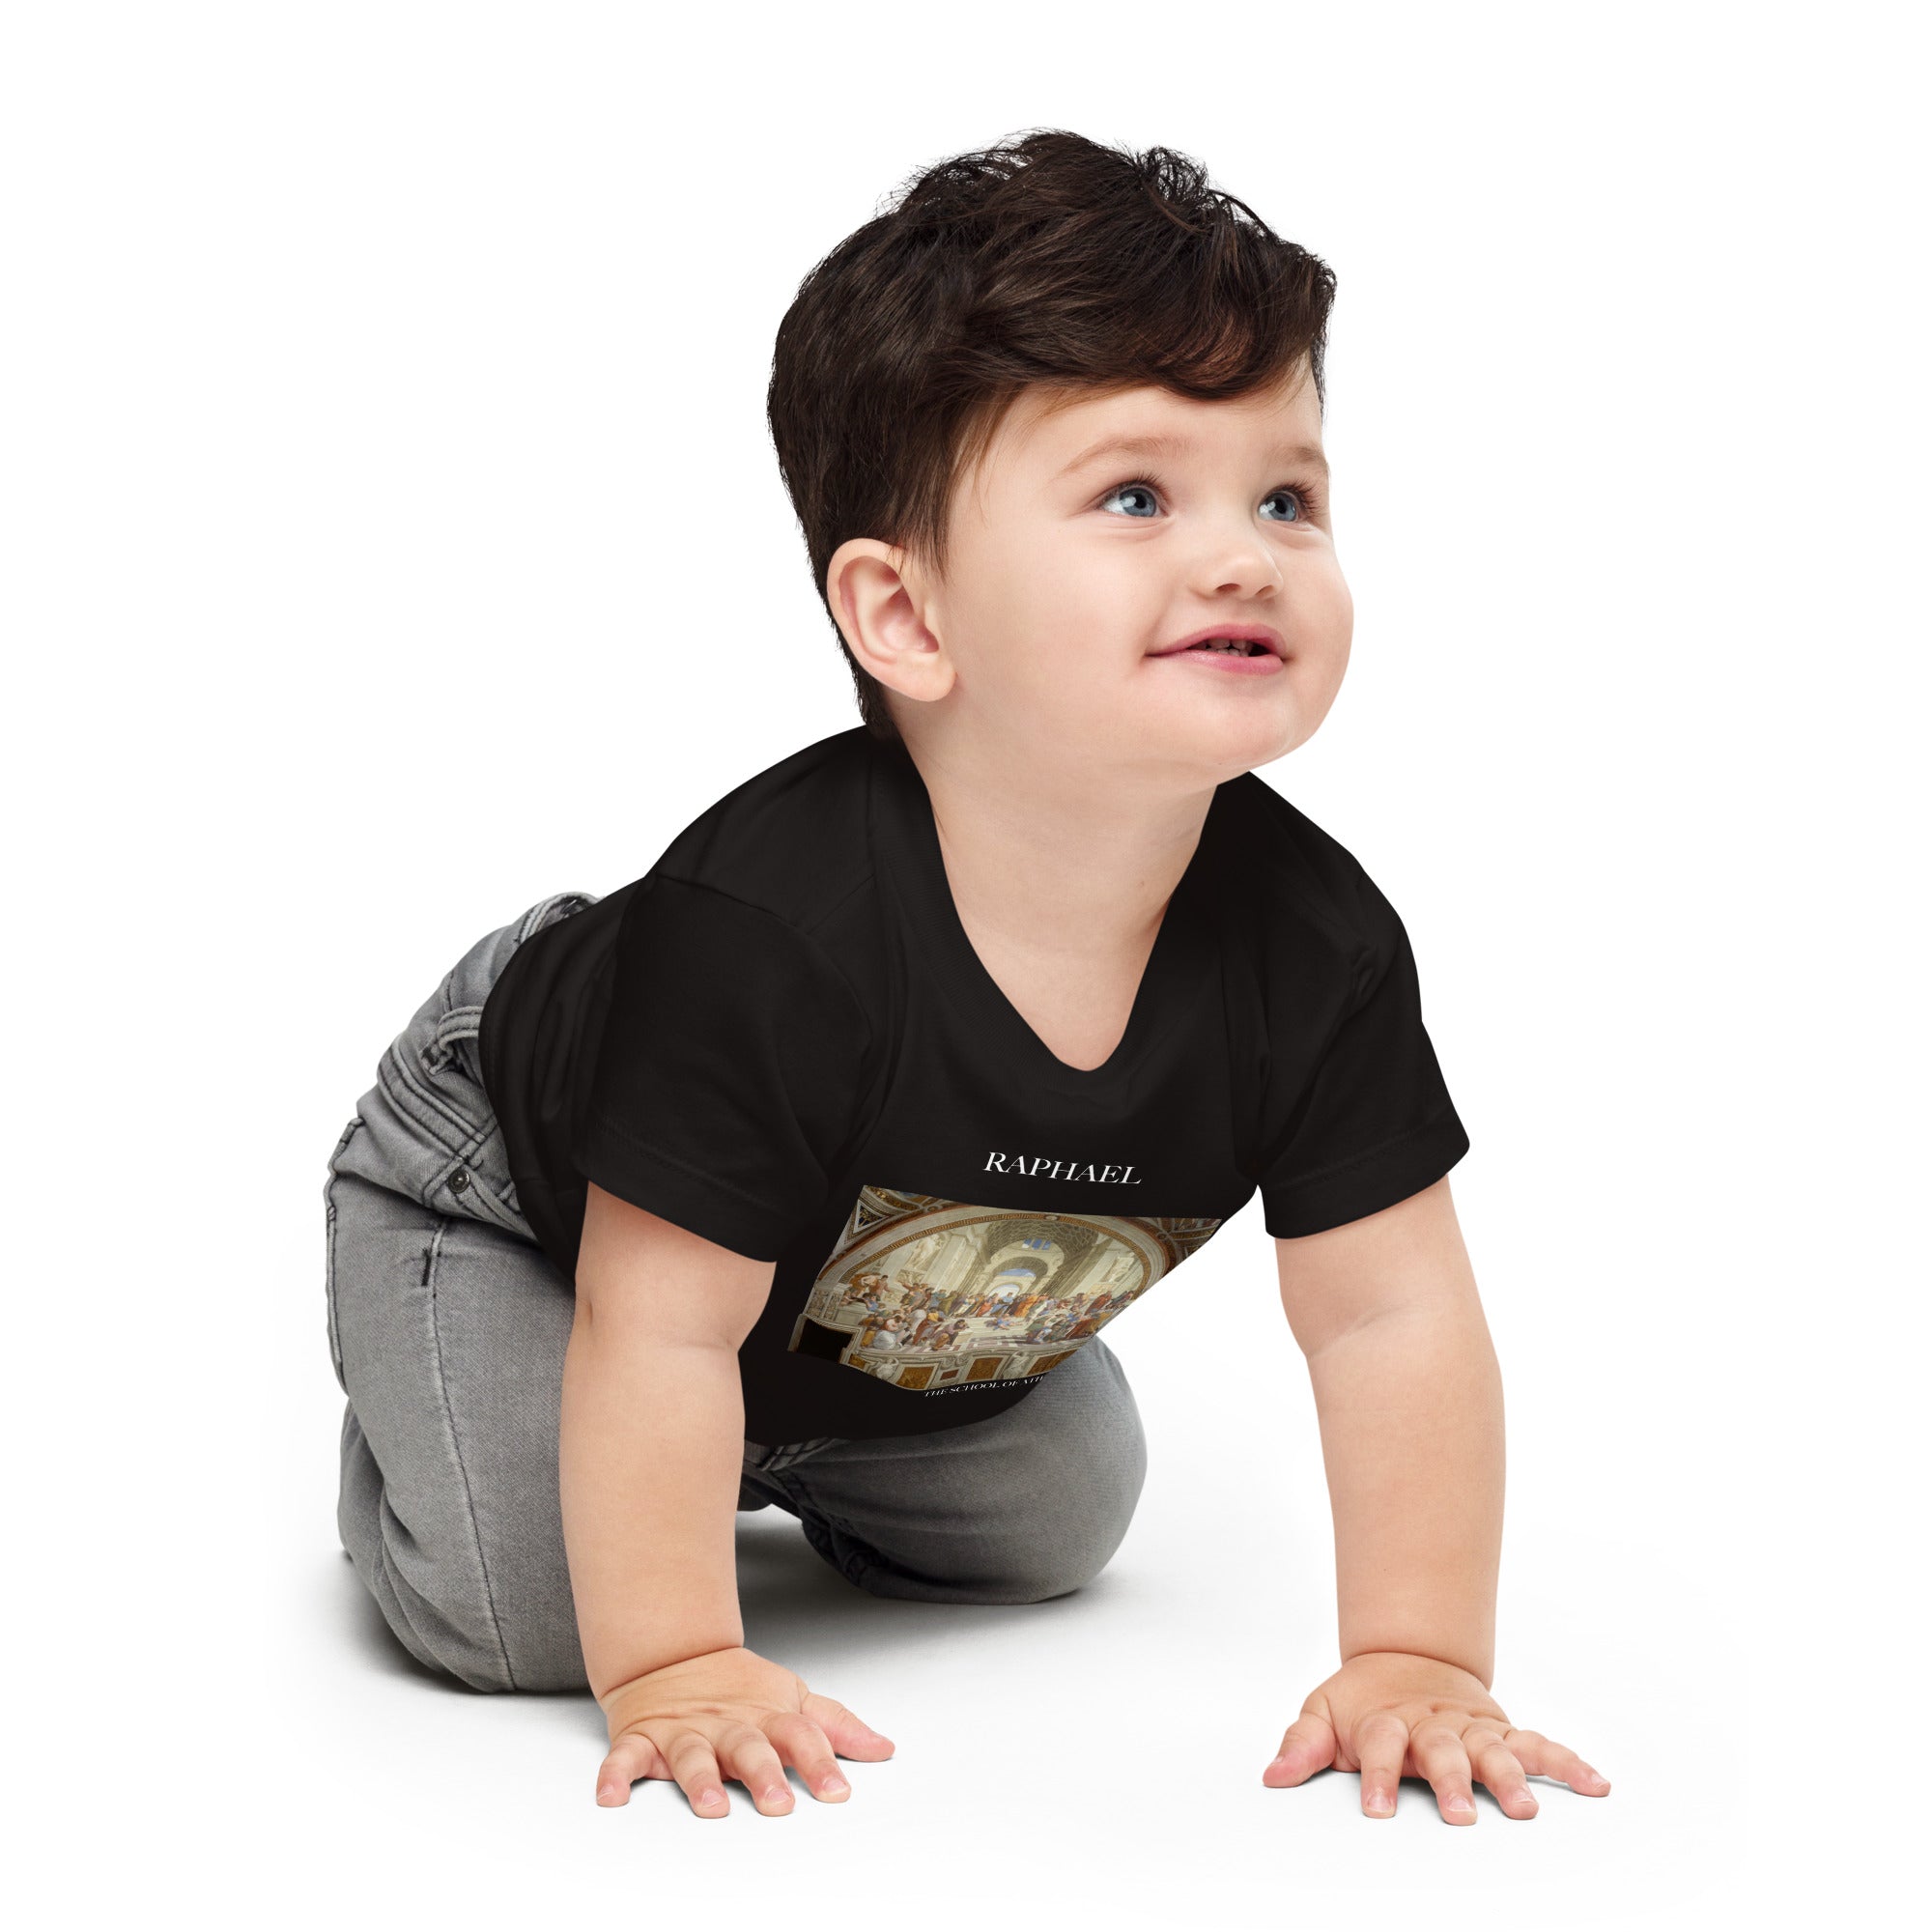 Raphael „Die Schule von Athen“ Berühmtes Gemälde Baby Staple T-Shirt | Premium Baby Art T-Shirt